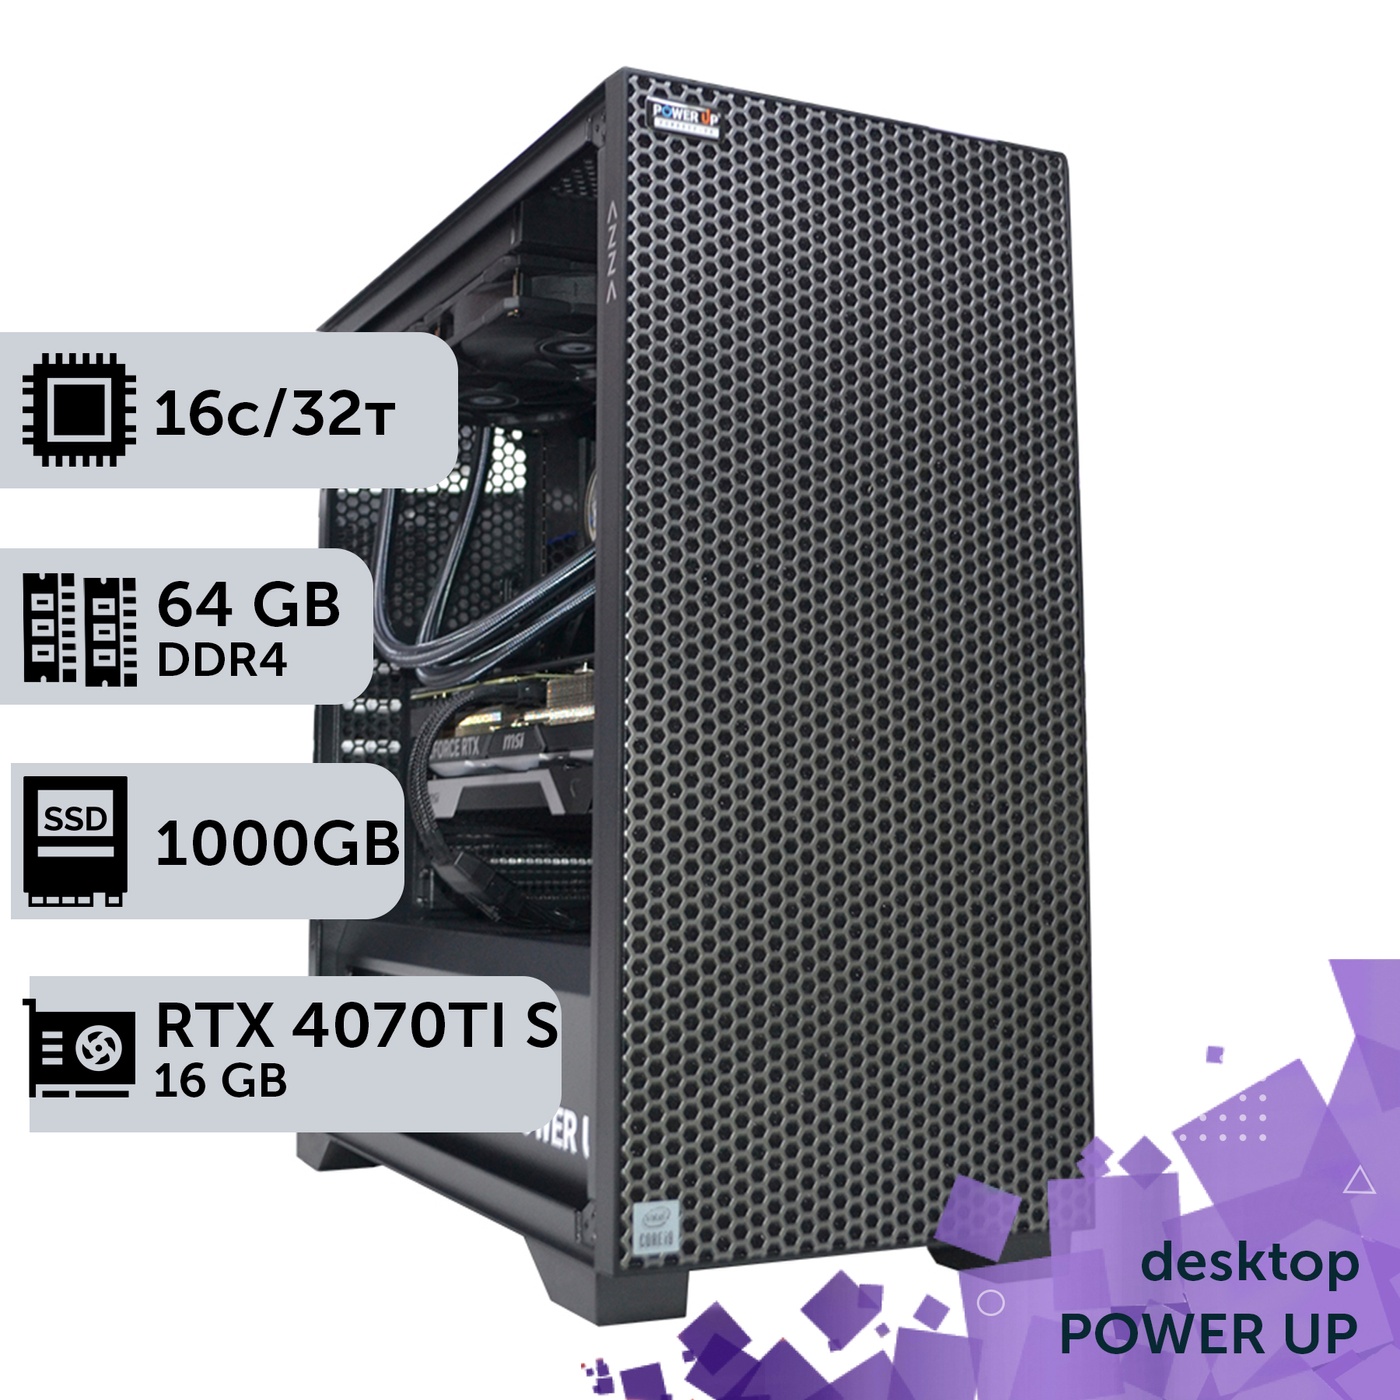 Рабочая станция PowerUp Desktop #363 Ryzen 9 5950x/64 GB/SSD 1TB/GeForce RTX 4070Ti Super 16GB